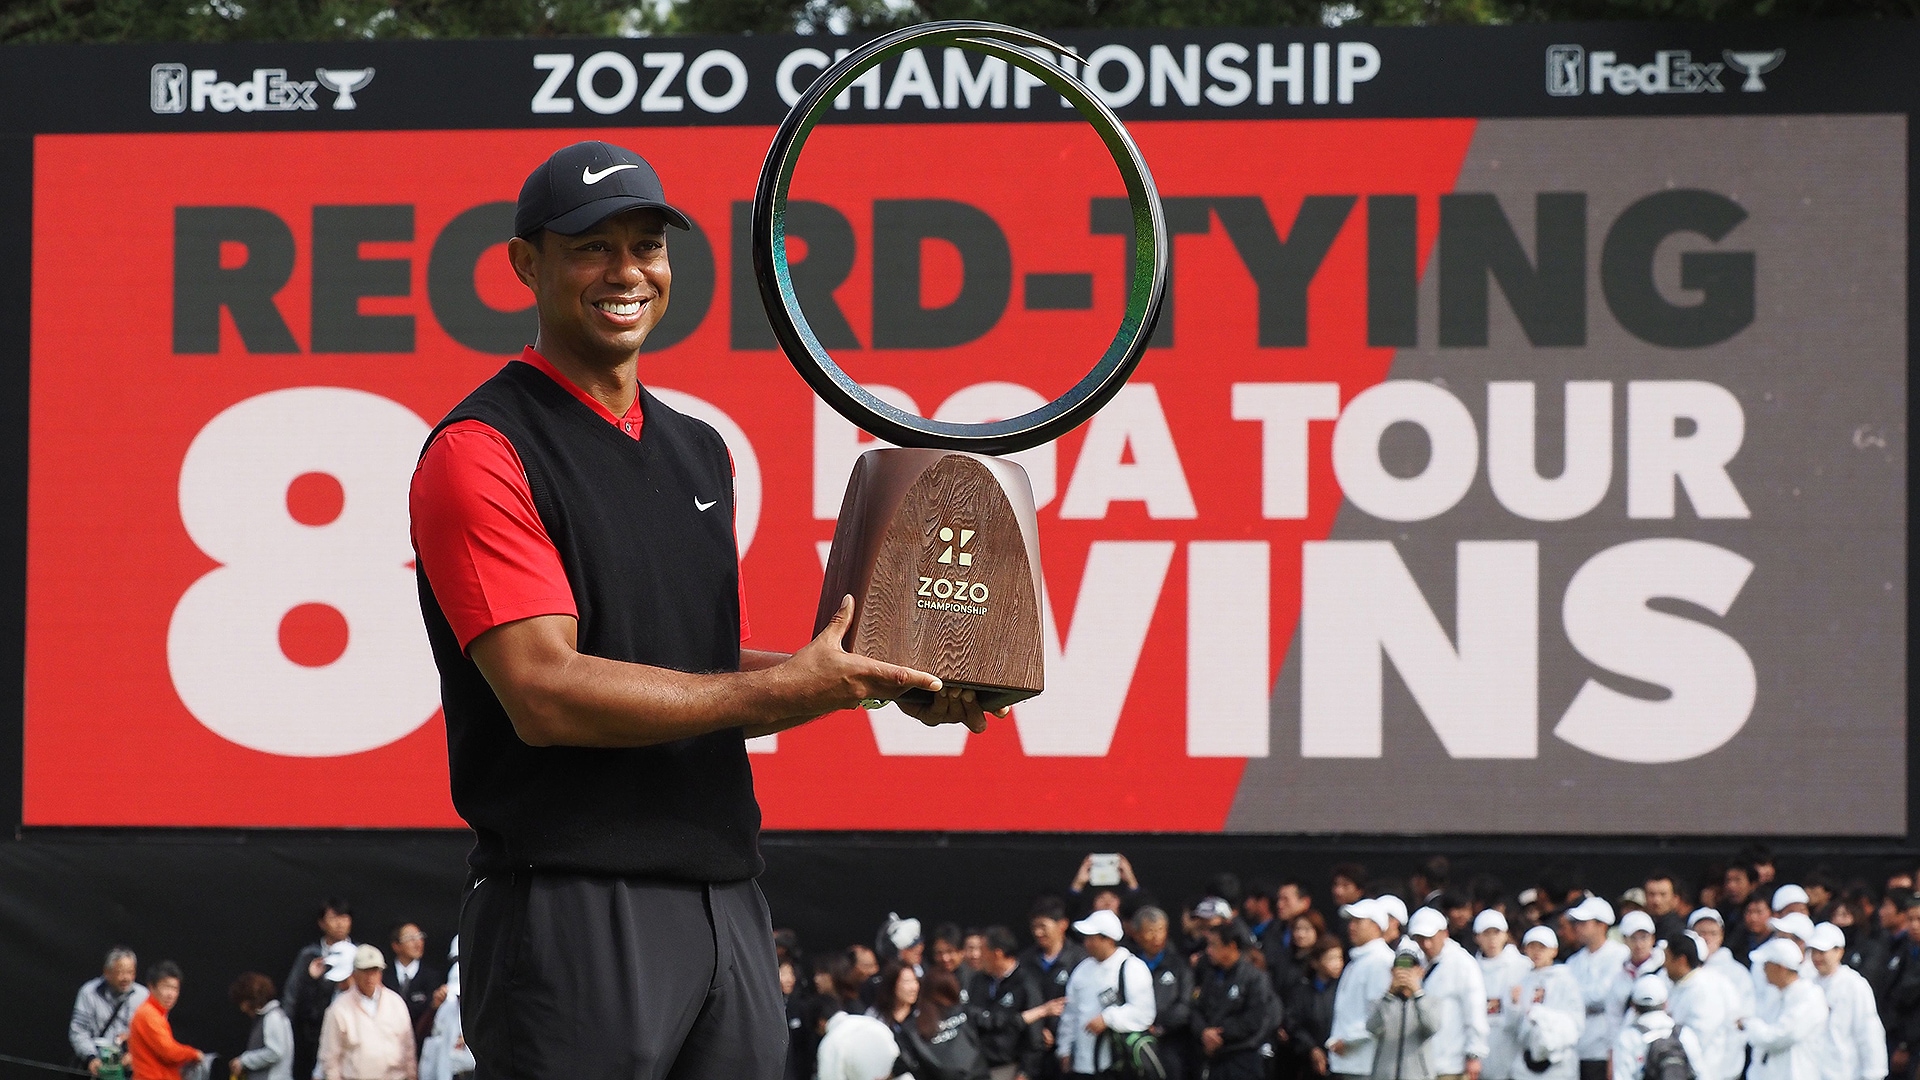 Zozo Championship 5 things: Tiger Woods’ record-tying win; Xander Schauffele’s Japan ties